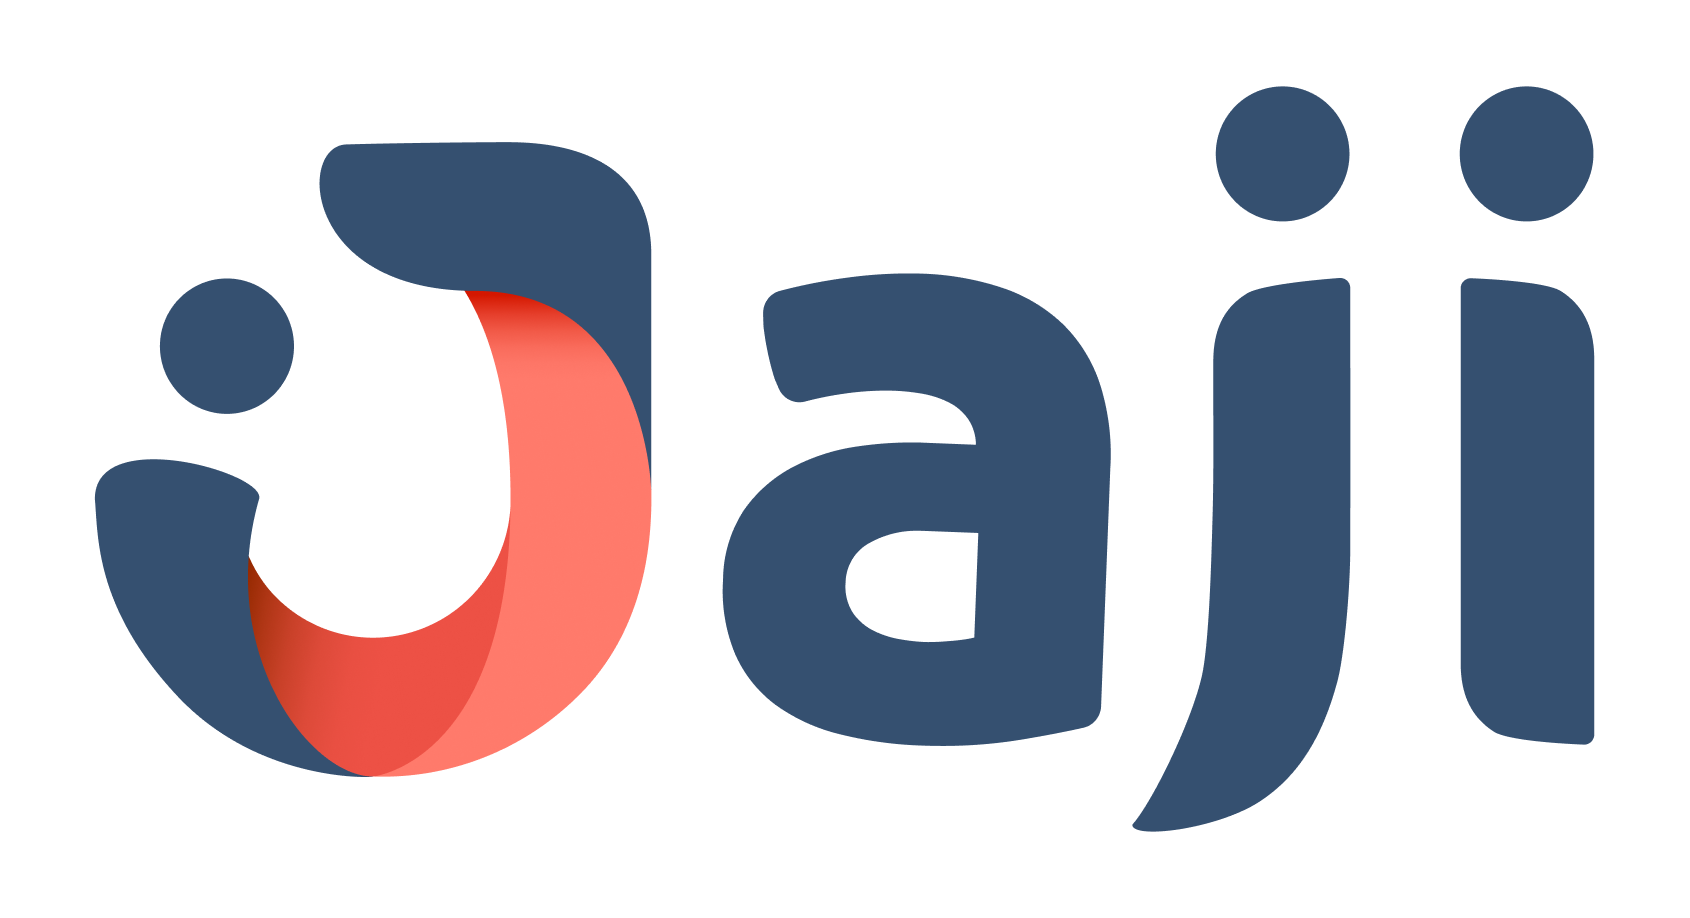 jaji logo